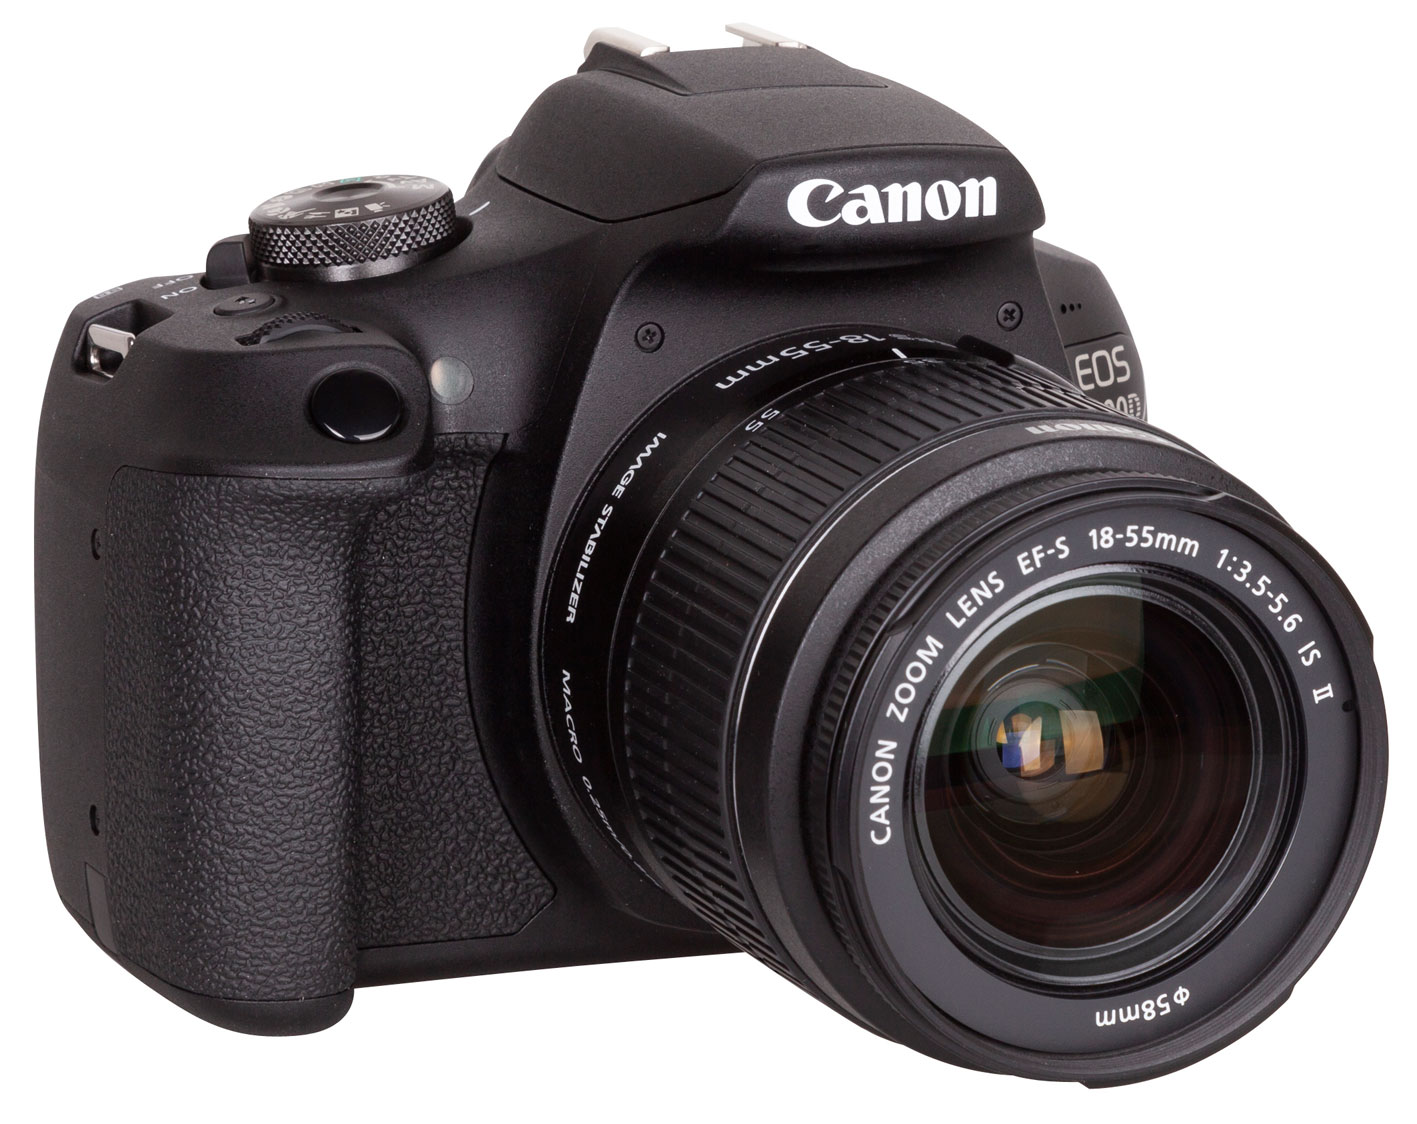 Kameratest Canon EOS 20D   FOTO HITS Magazin